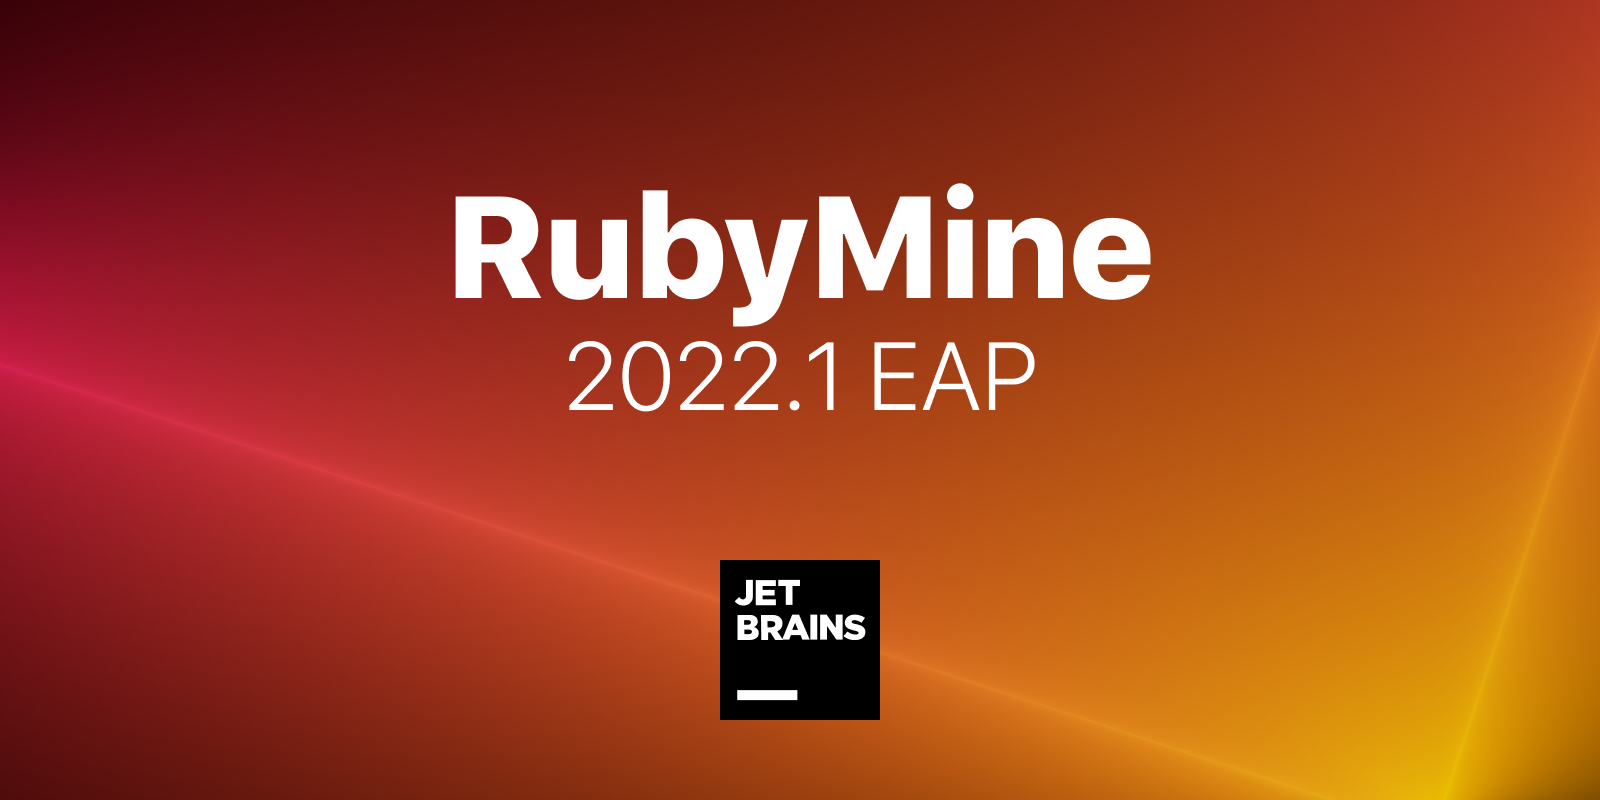 RubyMine 2022.1 EAP